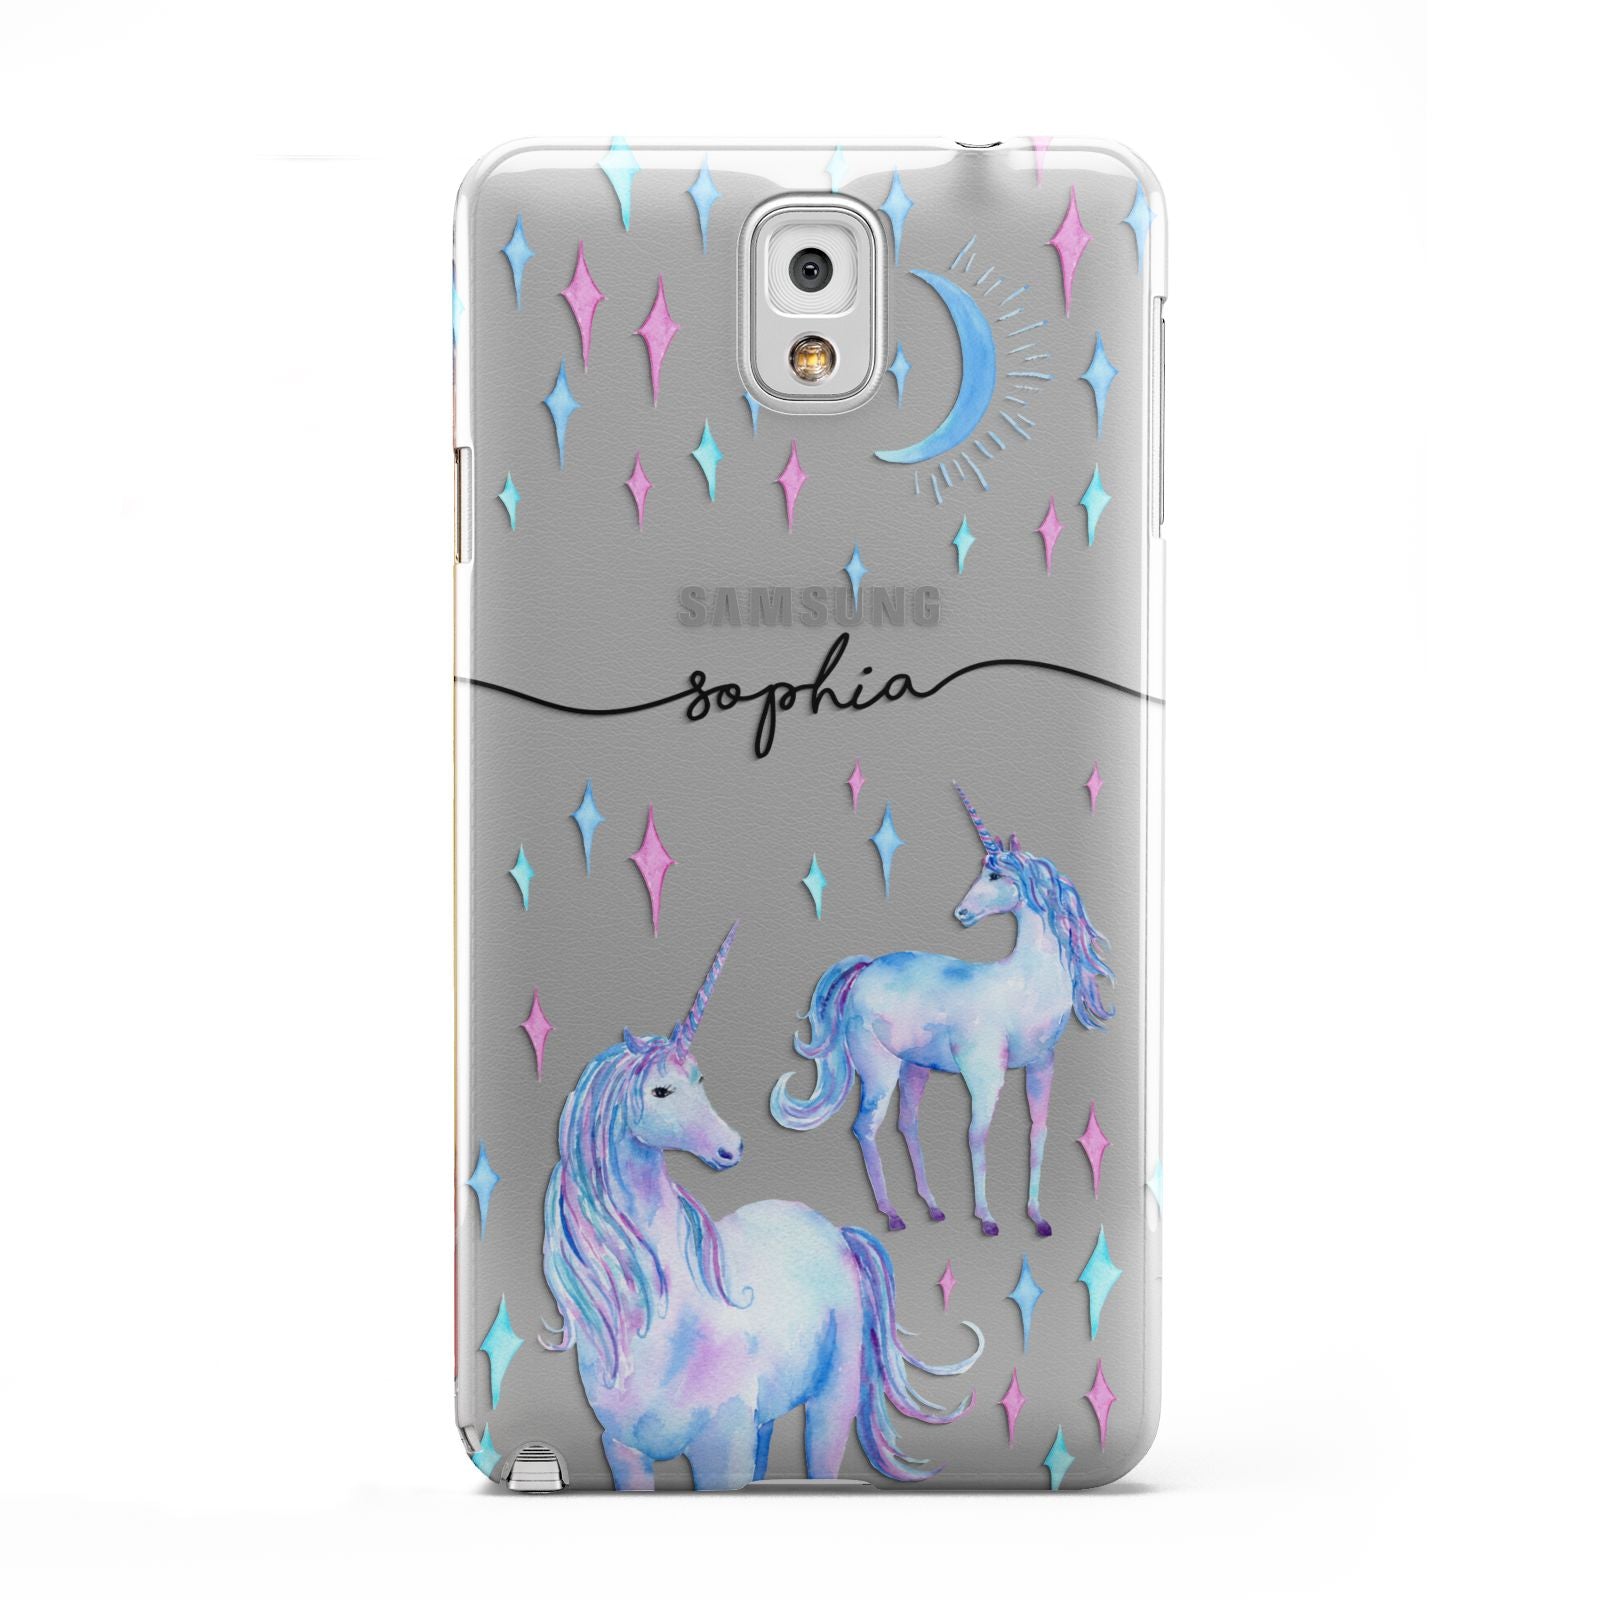 Personalised Unicorns Samsung Galaxy Note 3 Case